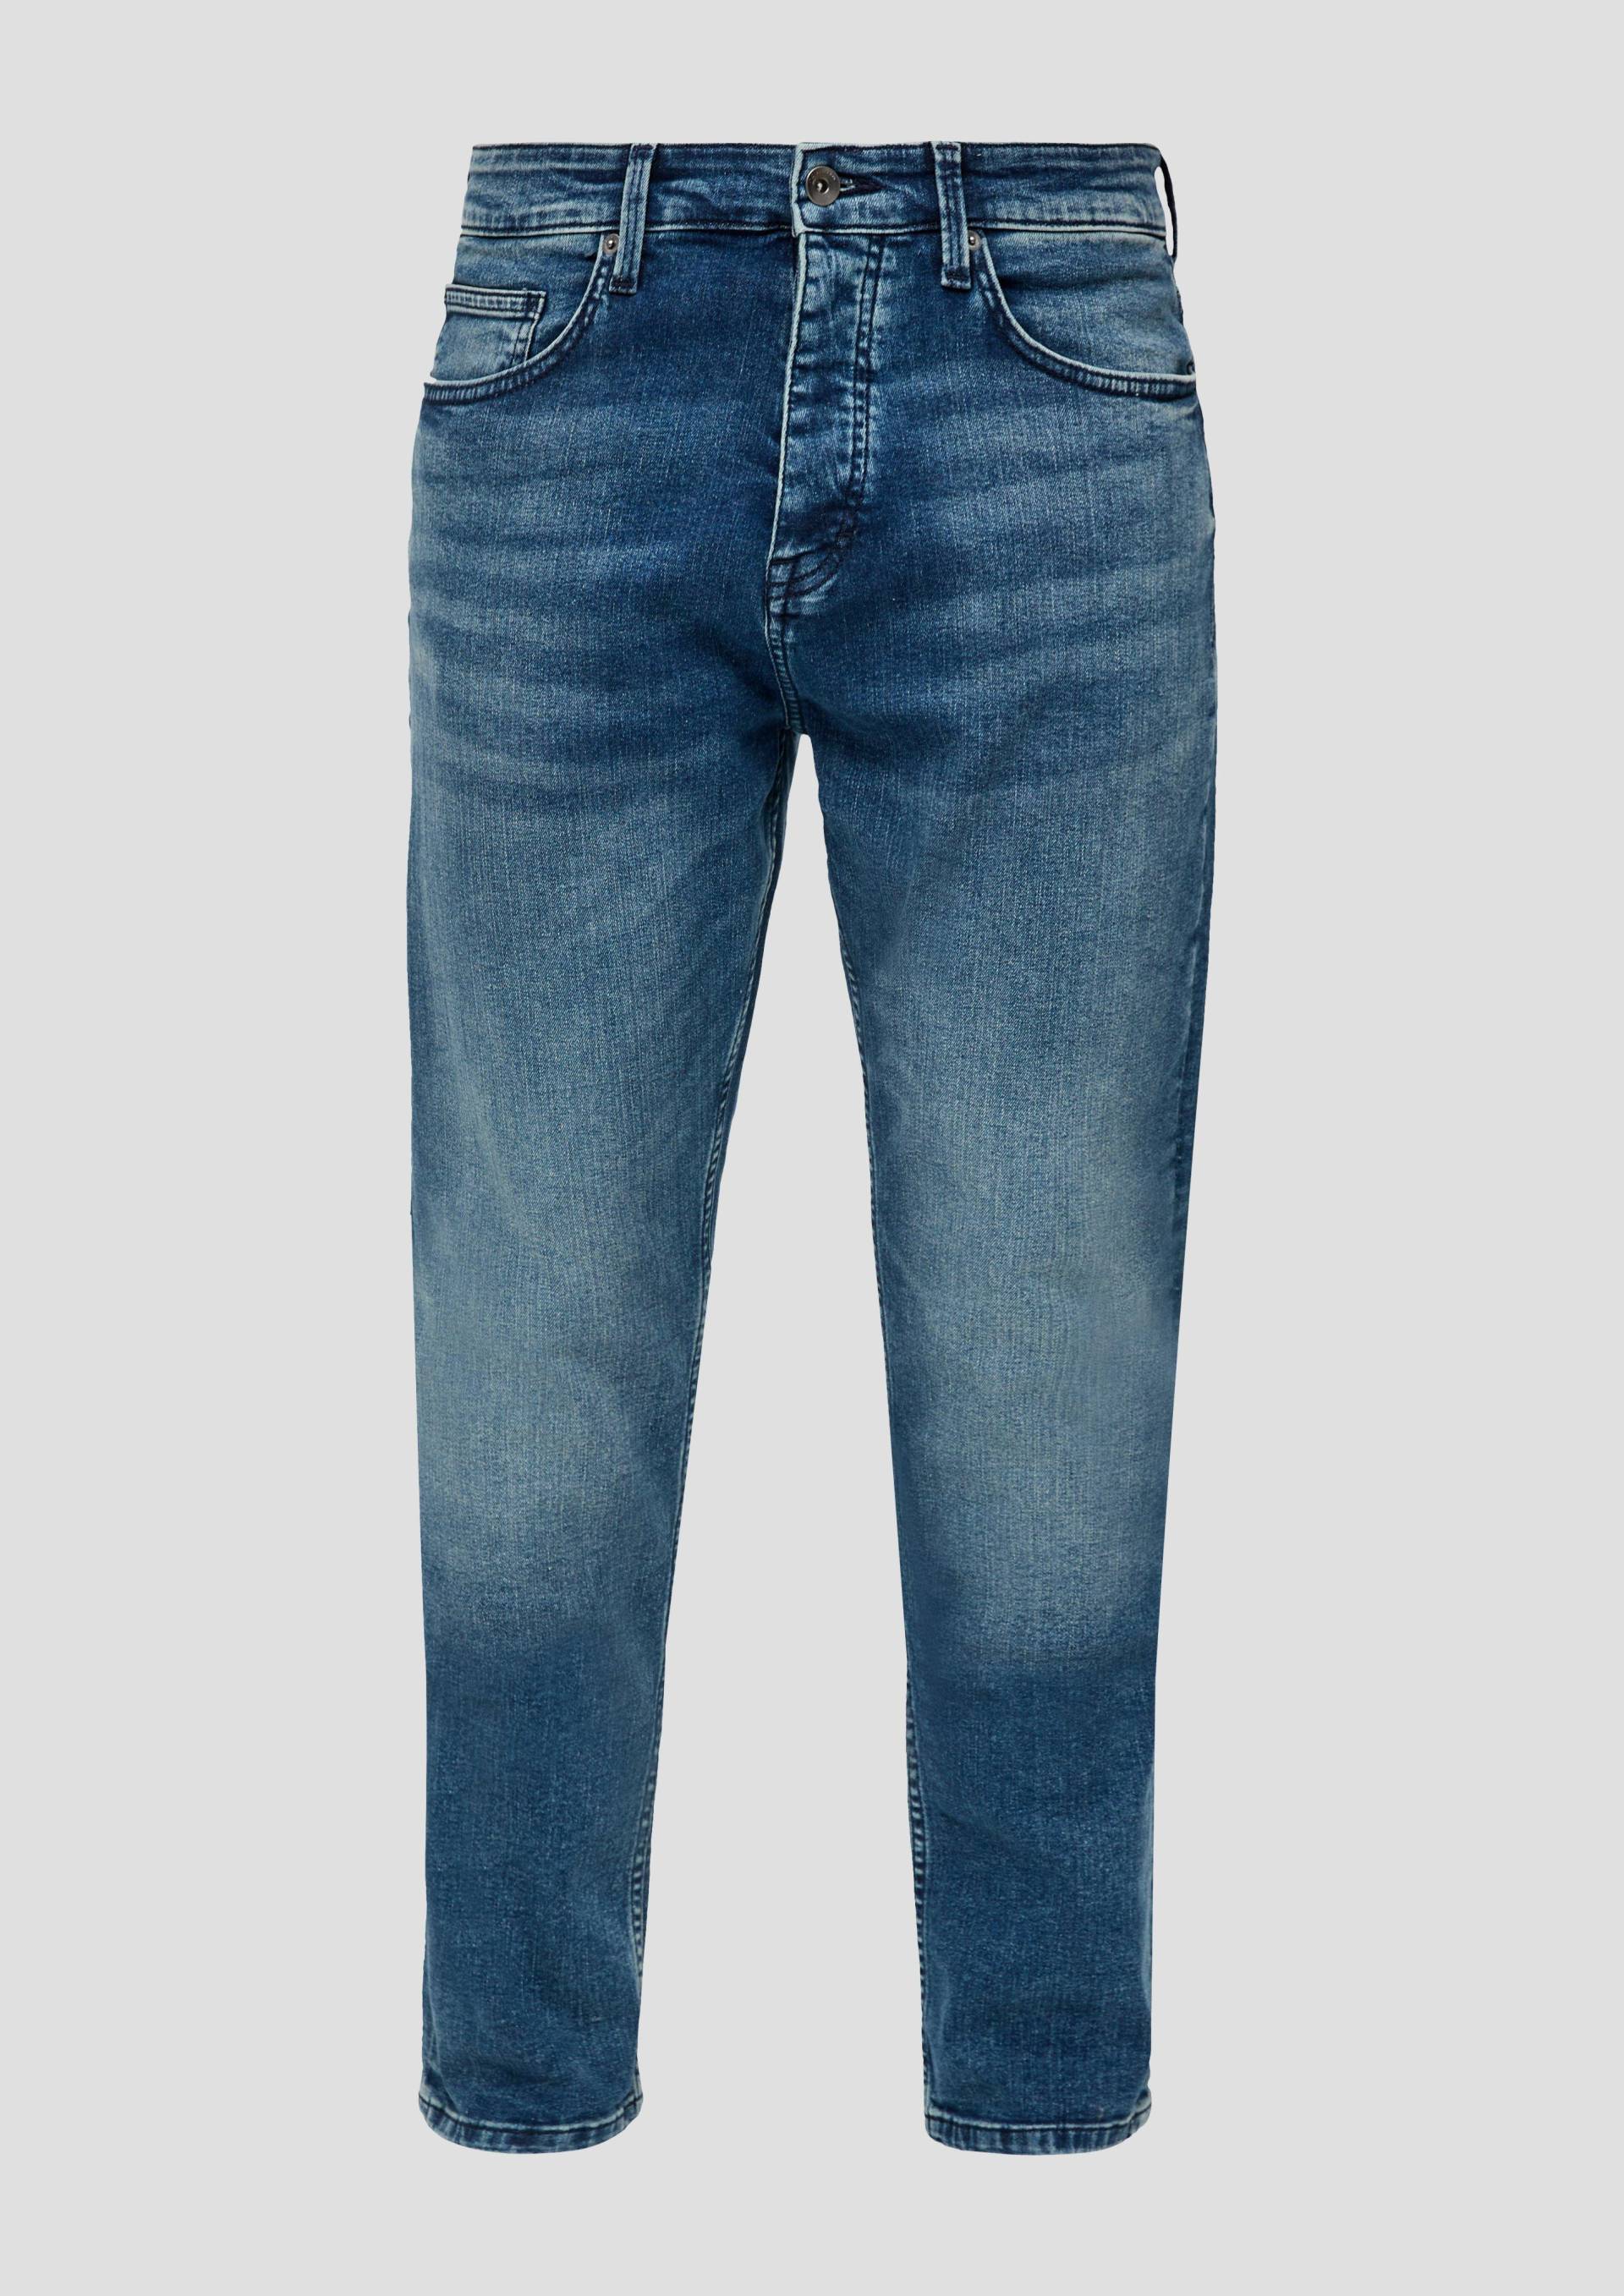 QS - Jeans Pete / Regular Fit / Mid Rise / Straight Leg, Herren, blau von QS